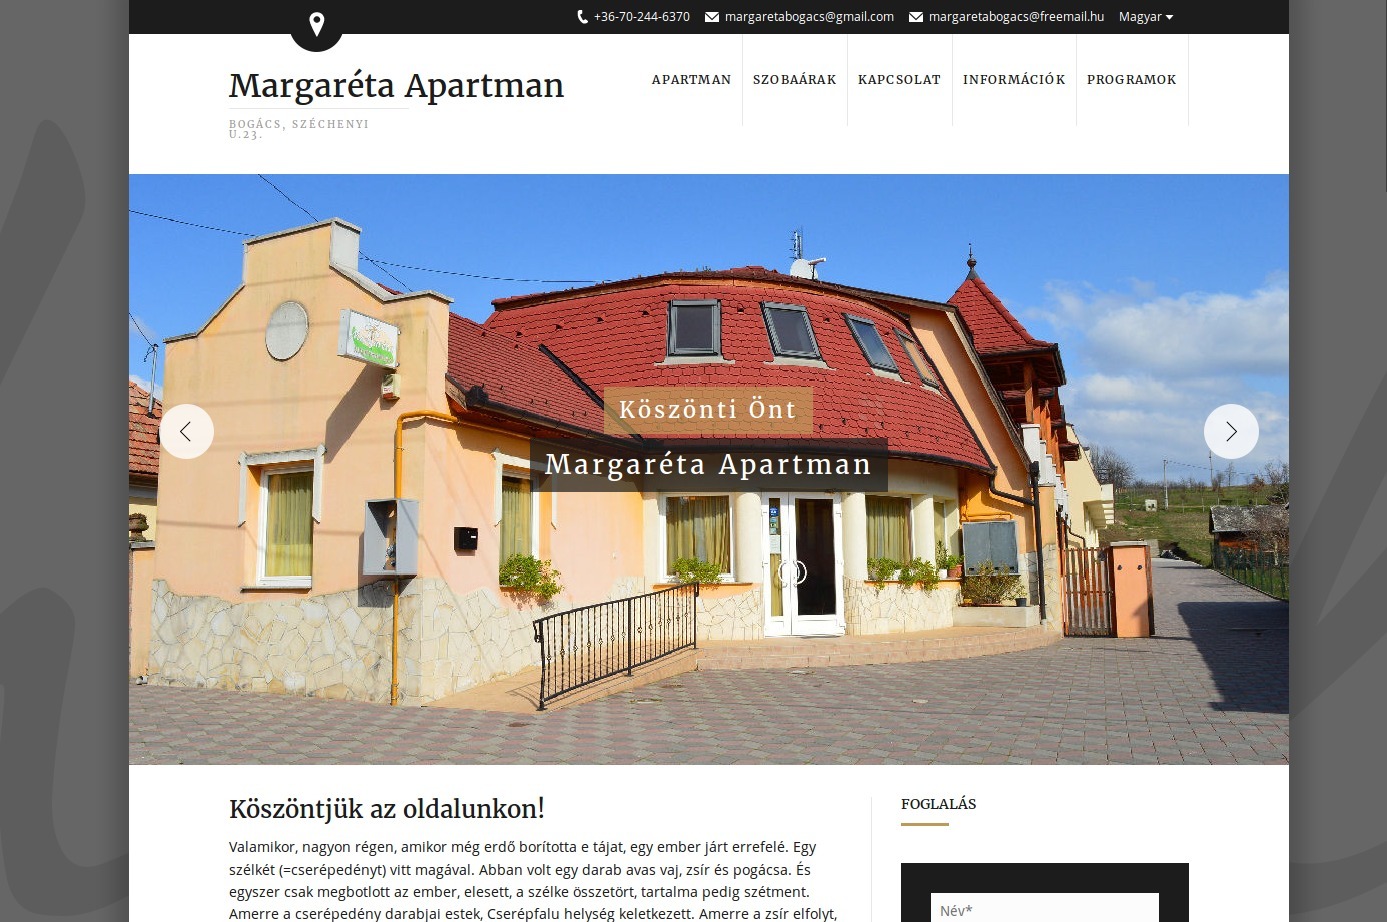 mangordi-wordpress-theme-hotel-best-hotel-wordpress-theme-i3p5j-o.jpg